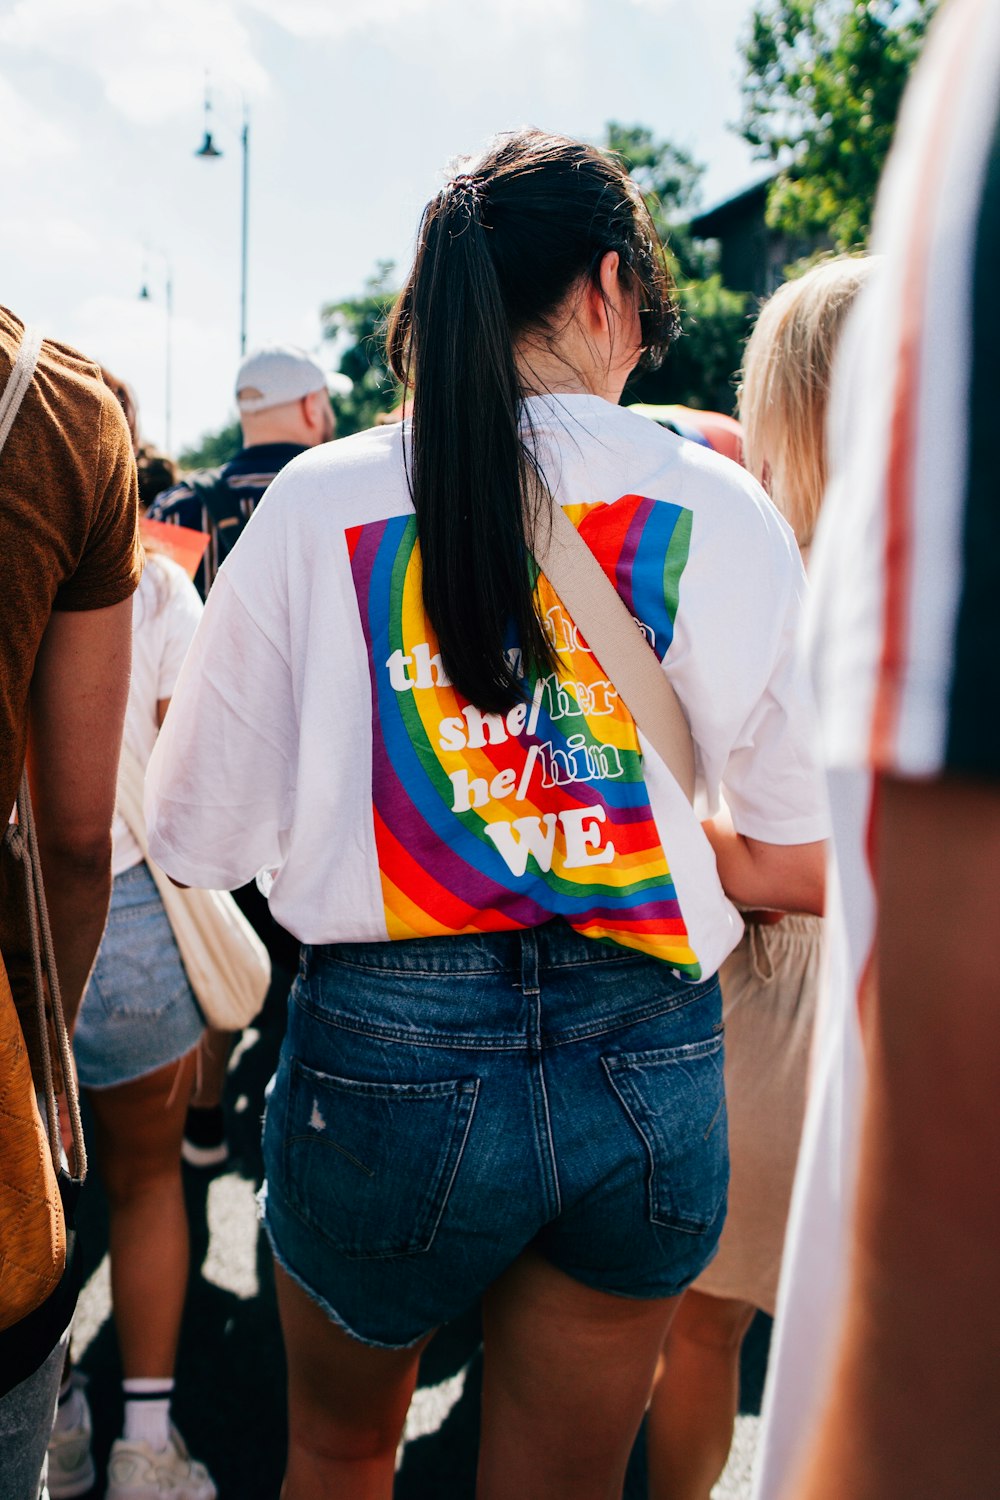 a woman wearing a rainbow shirt and denim shorts